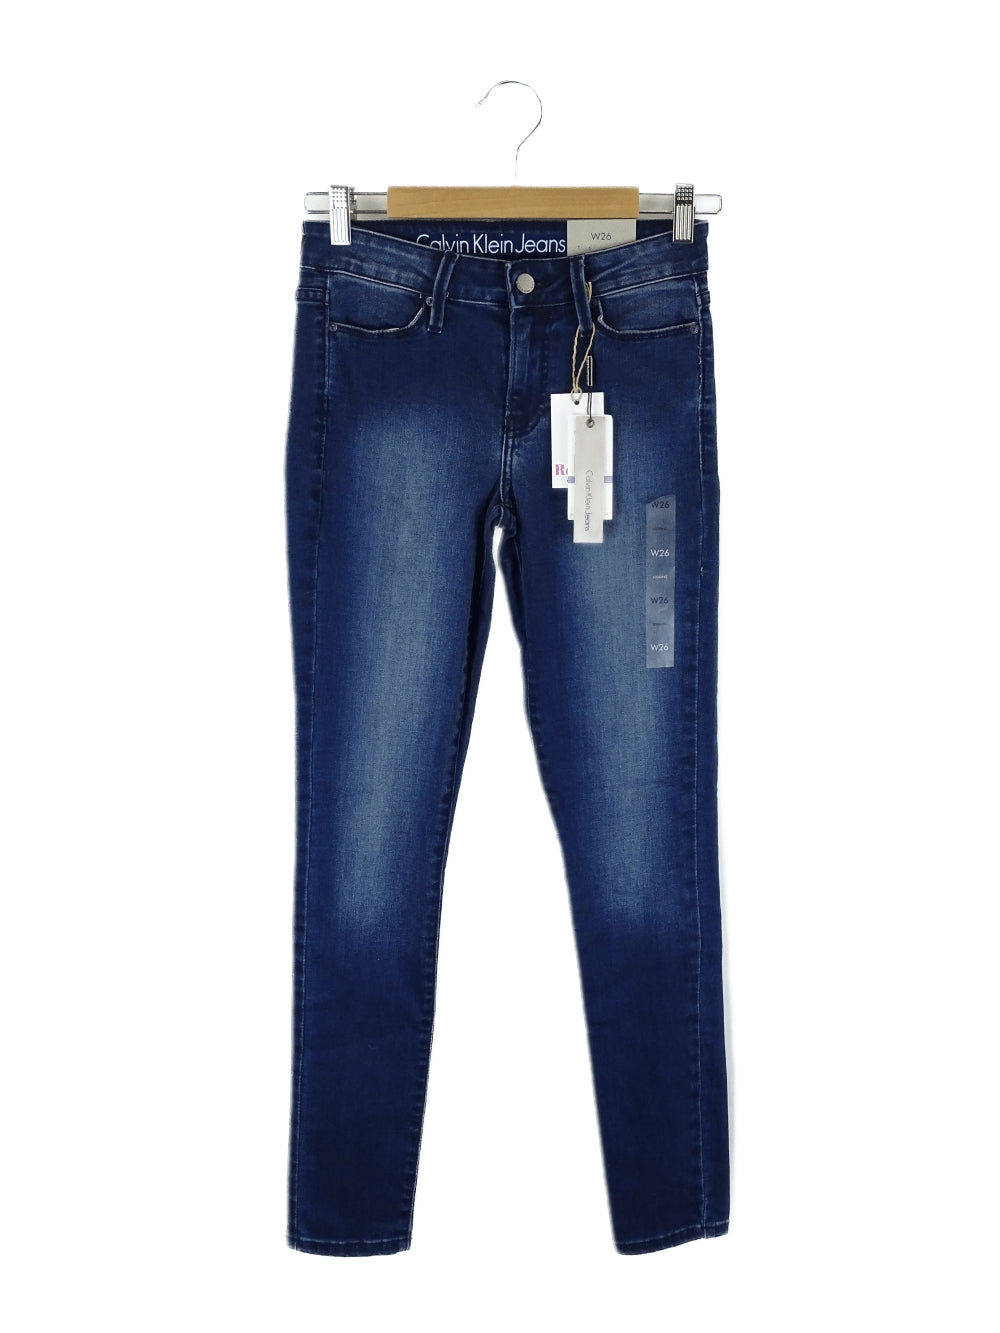 Calvin Klein Blue Stretch Jeans 26